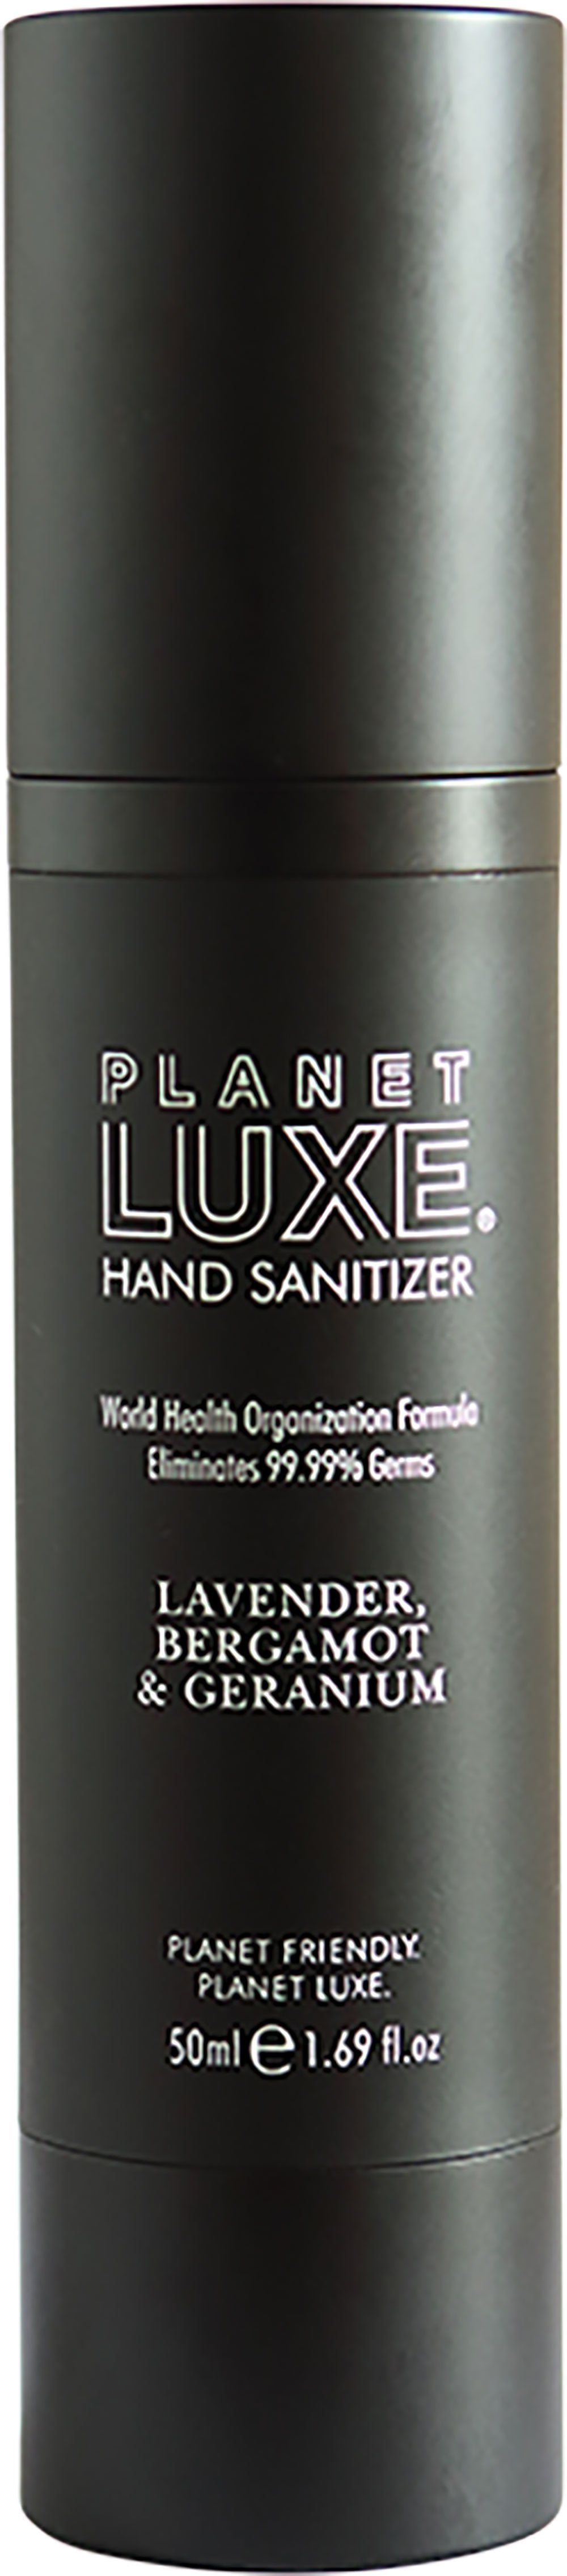 PLANET LUXE Hand Sanitizer Lavender, Bergamot & Geranium